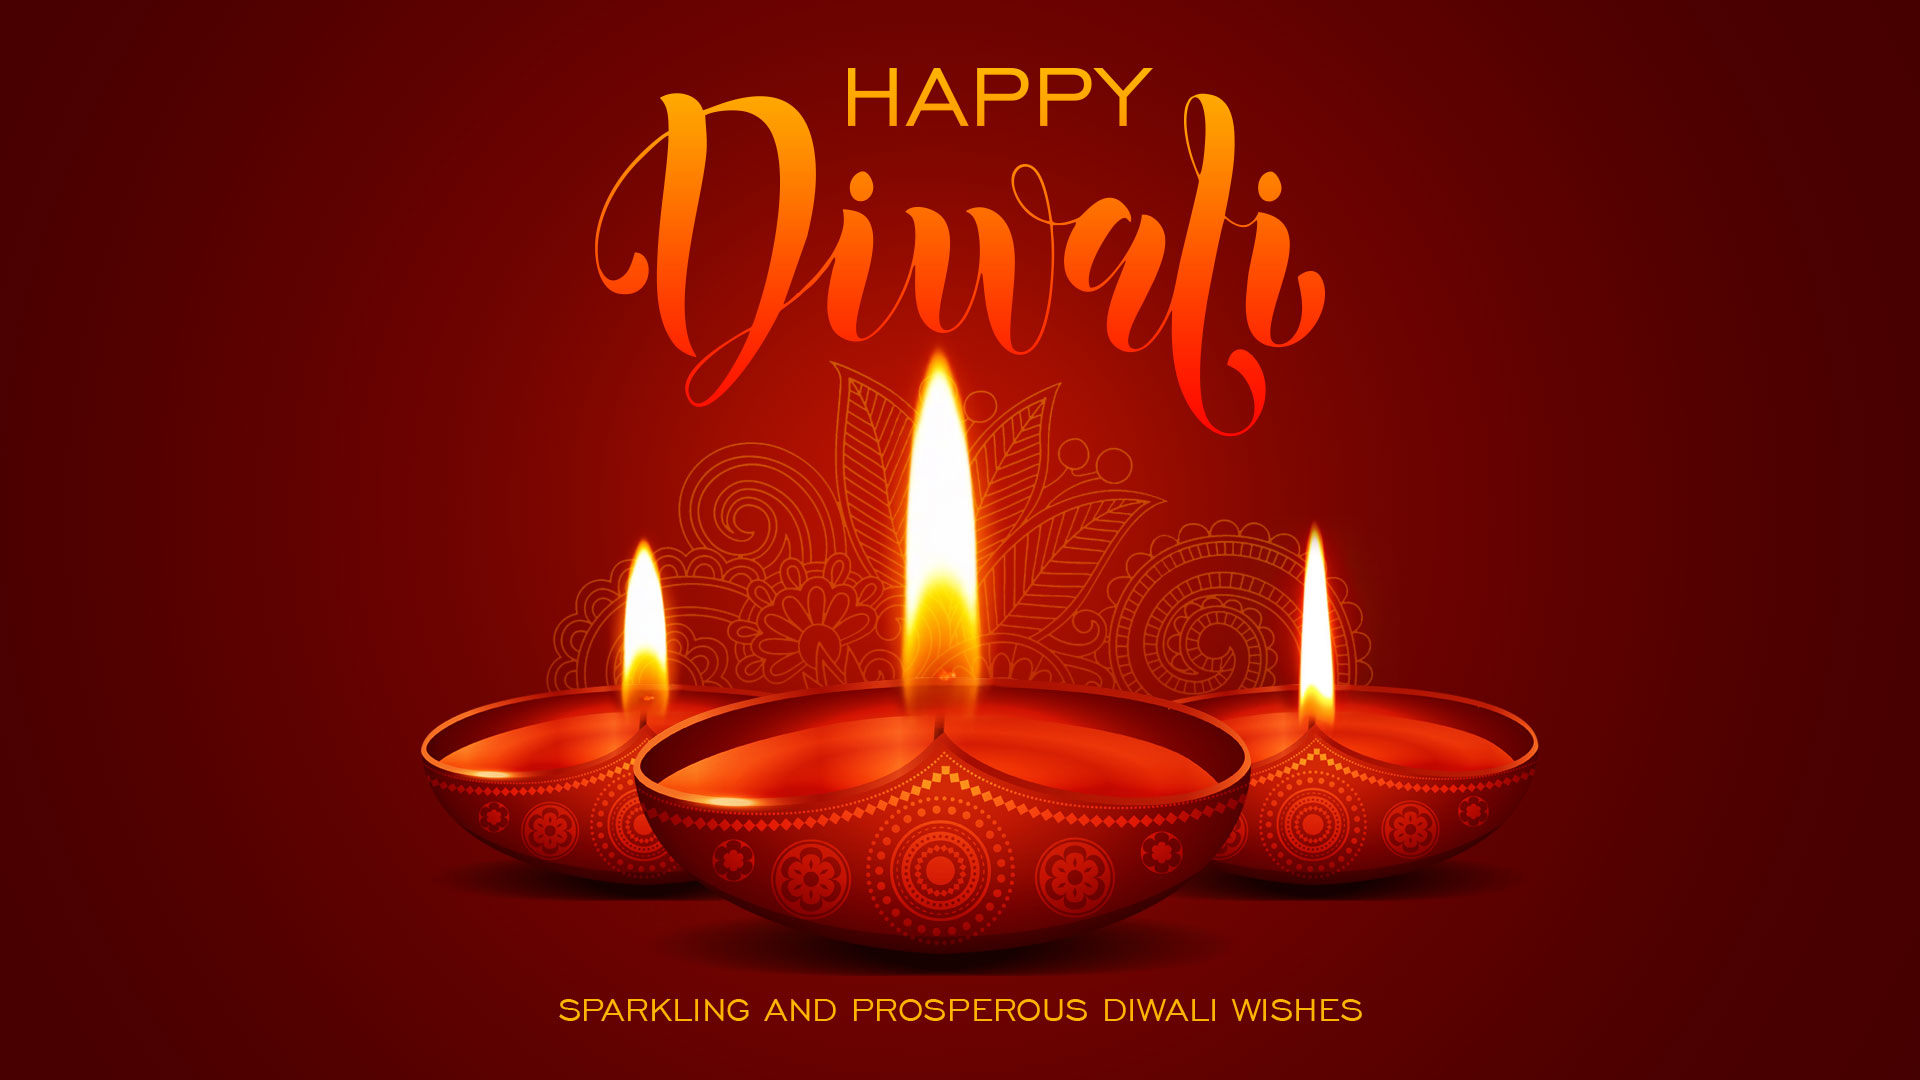 Diwali Greetings Cards Happy Diwali | Festivals